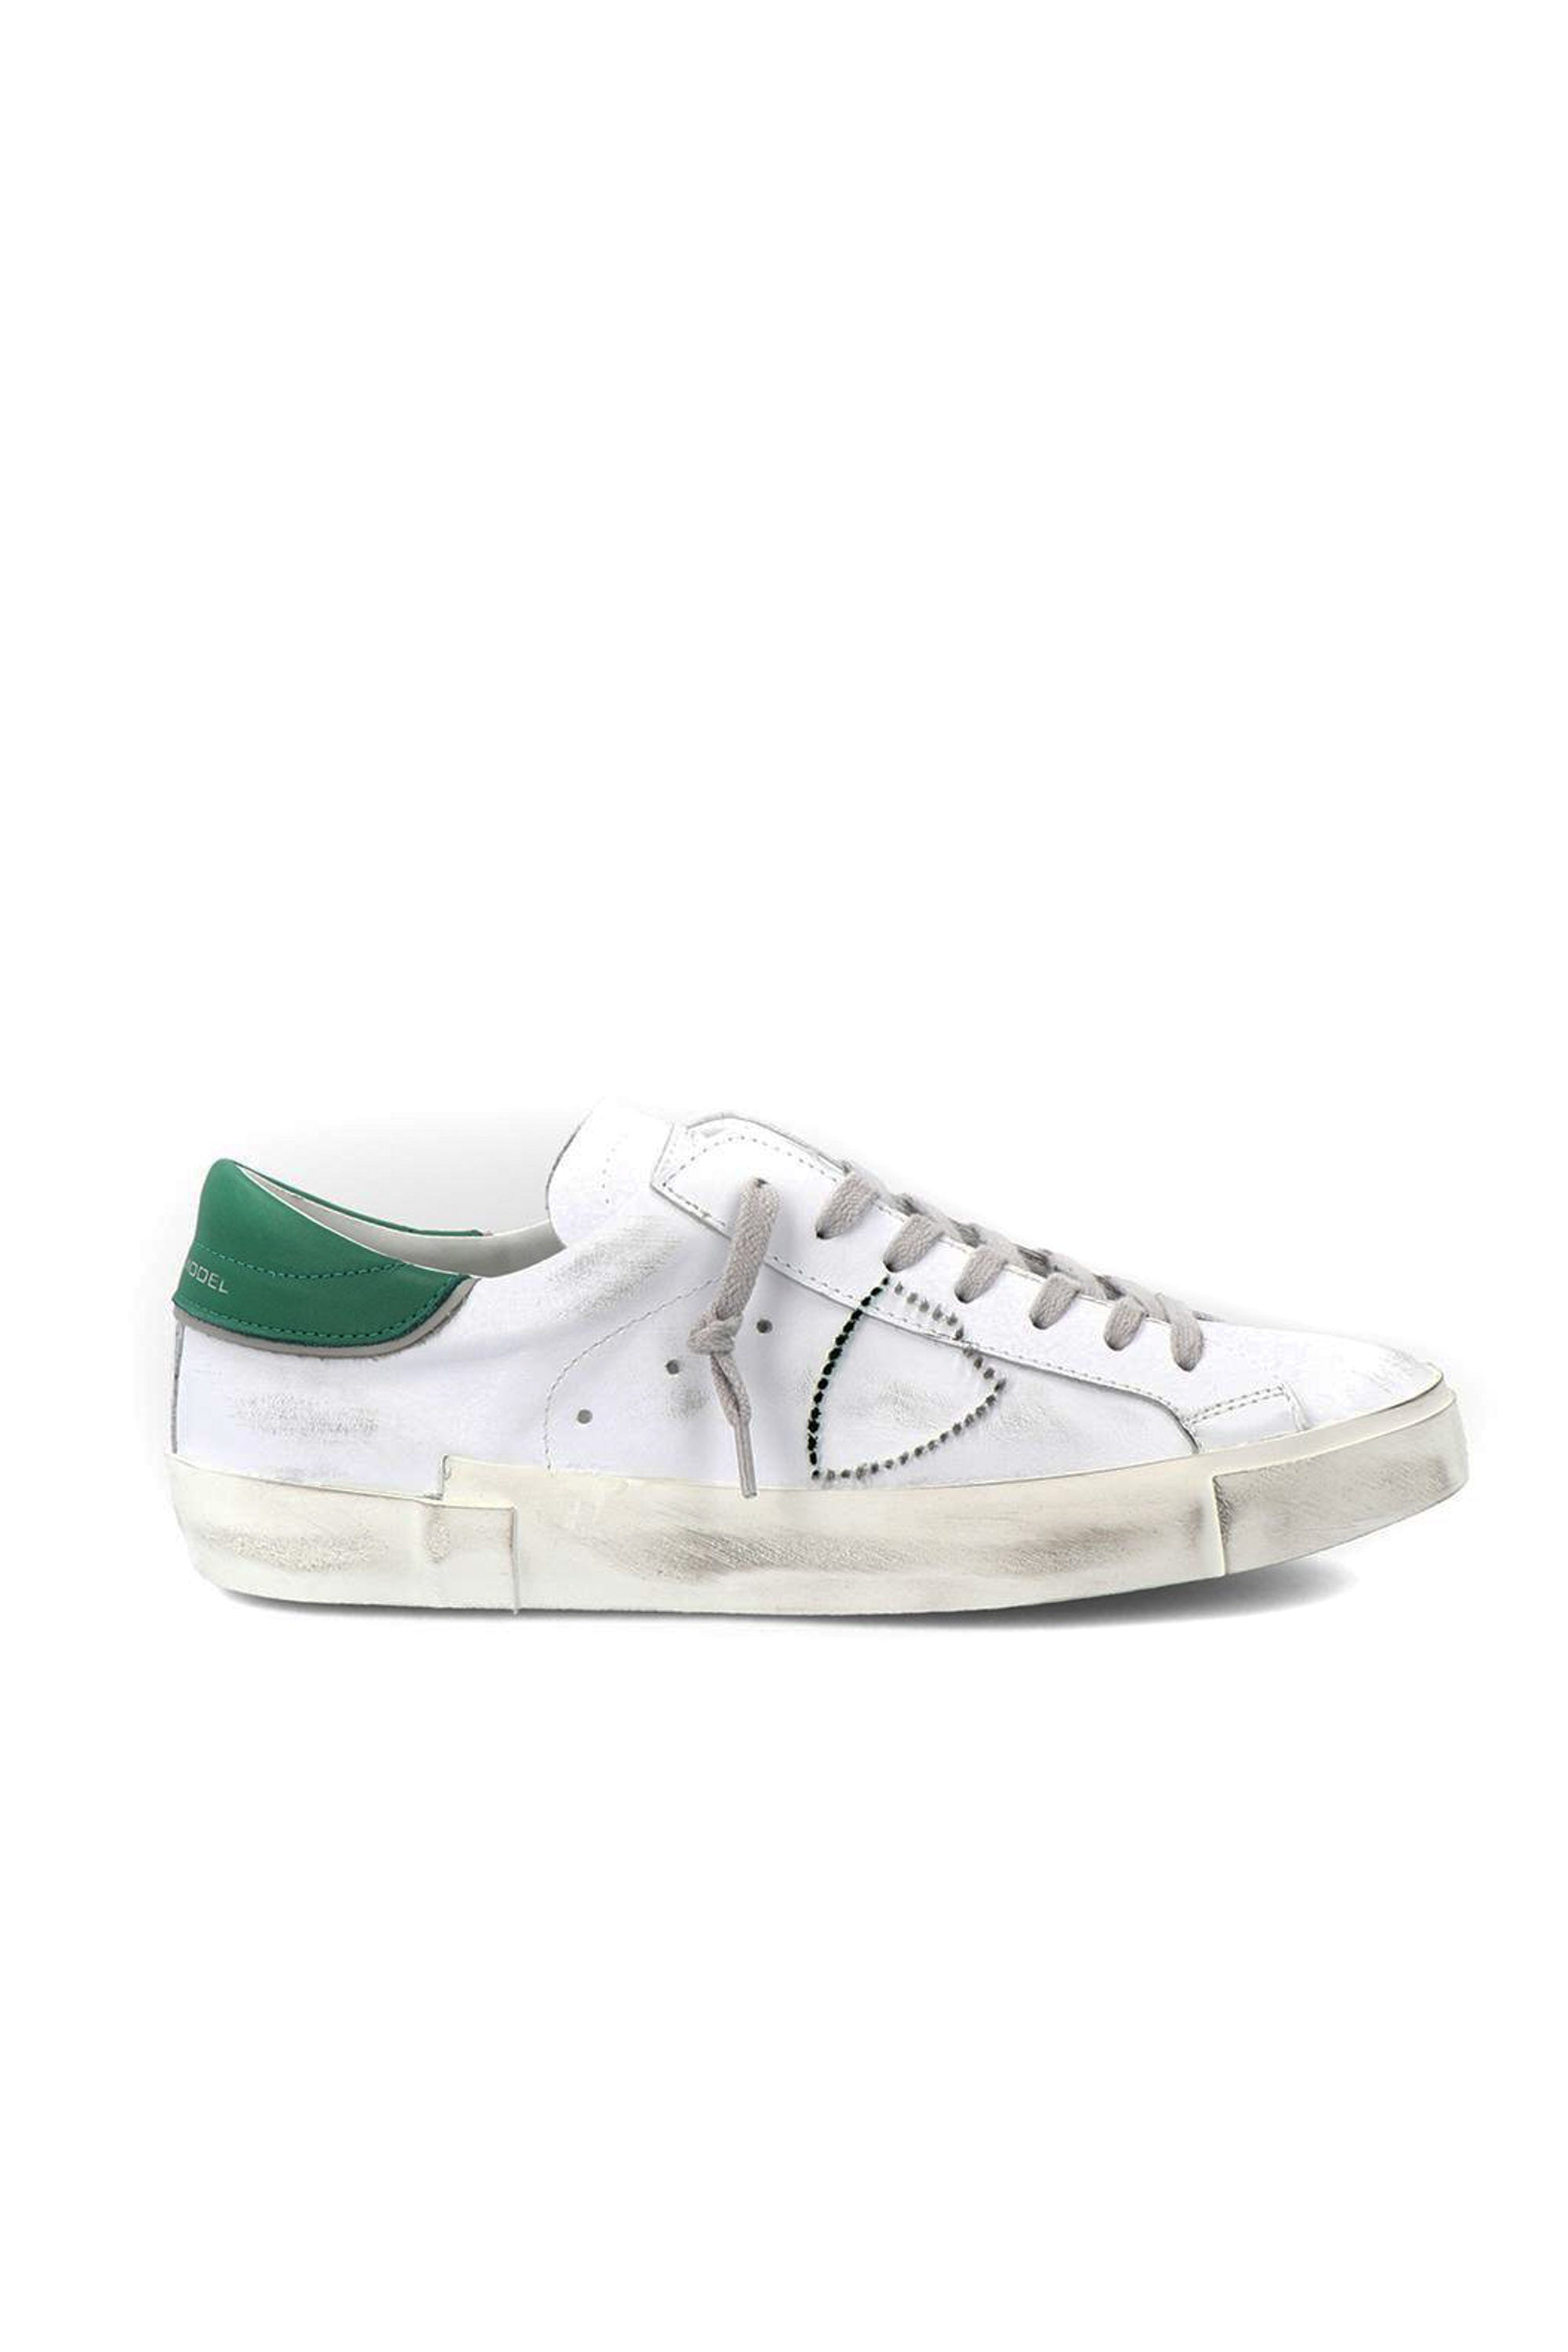 Low prsx sneaker with green heel tab